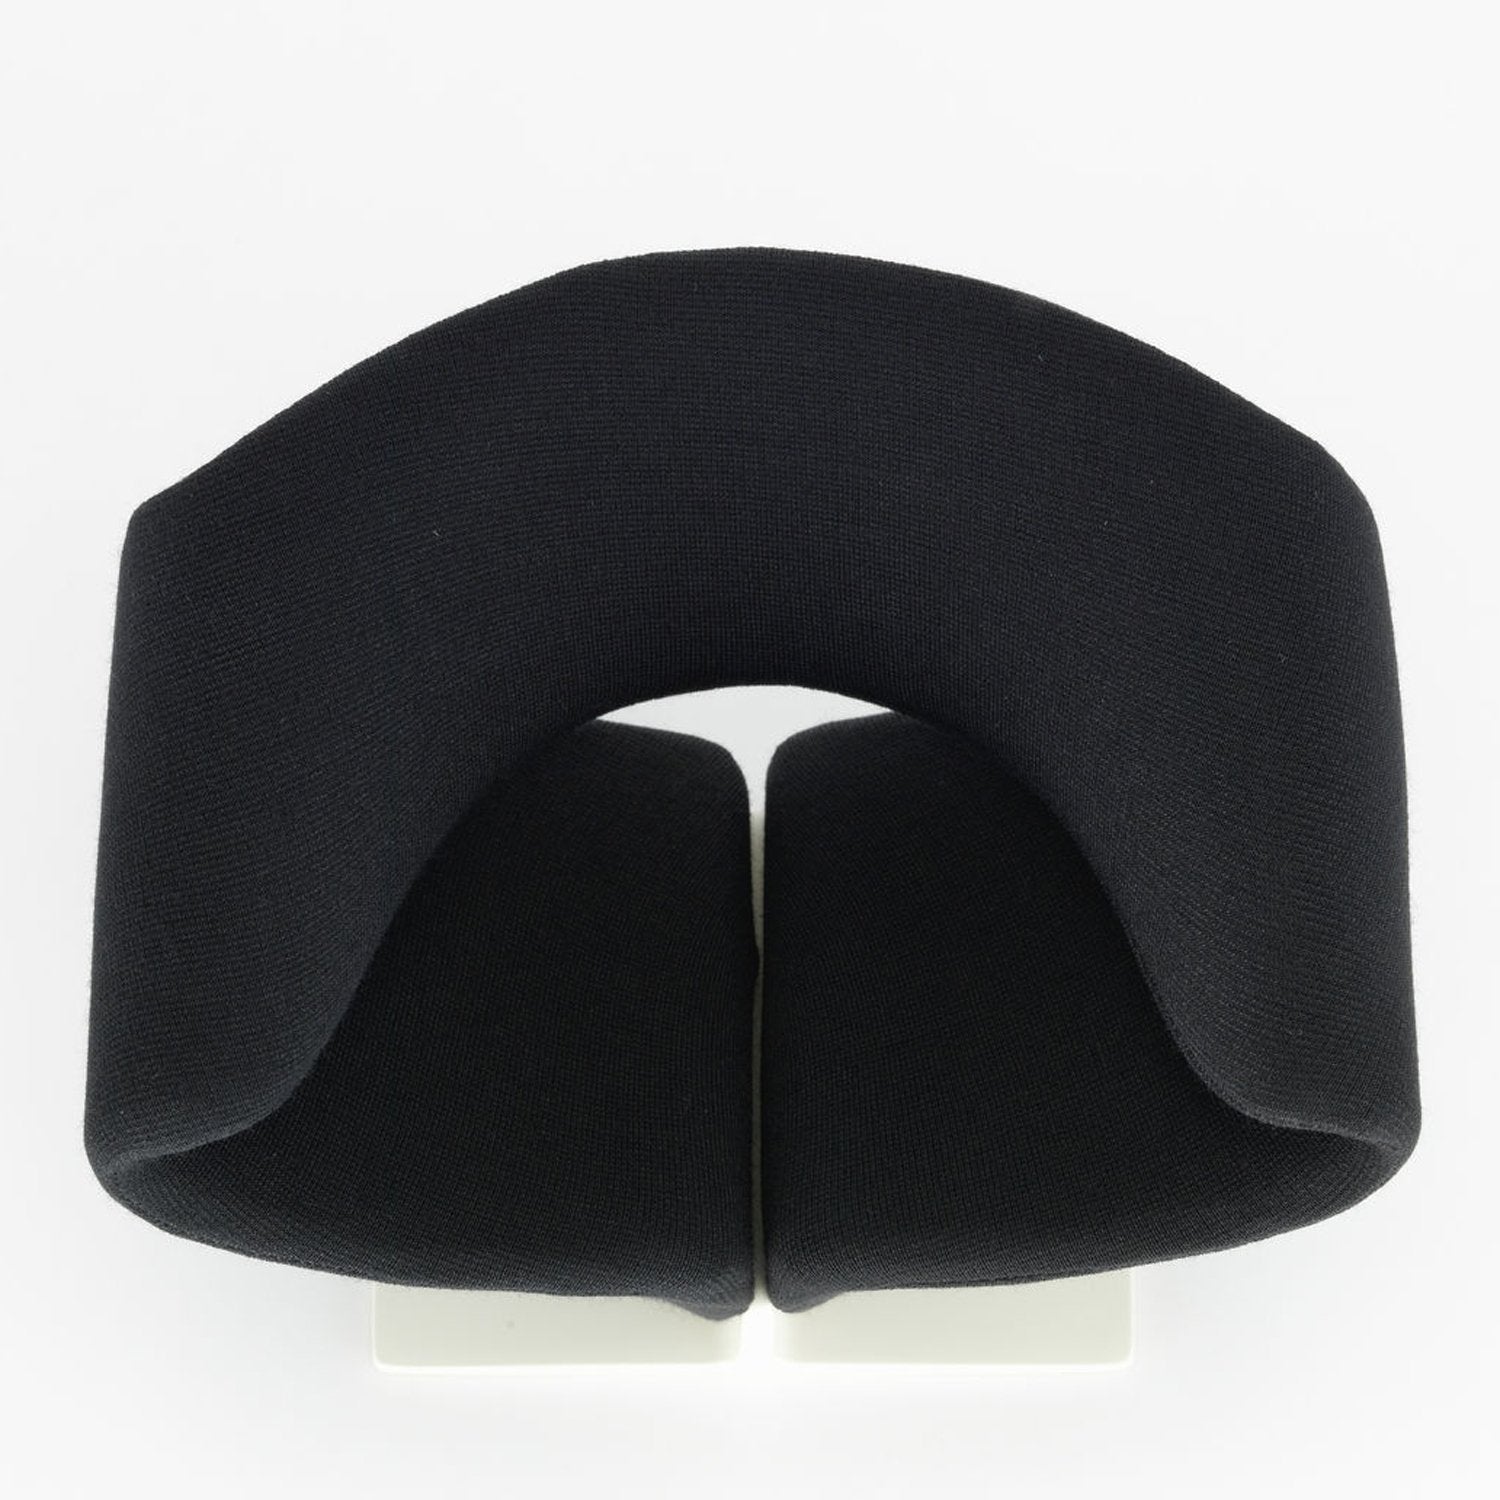 Miniatur Ribbon Chair - Vitra Design Museum Shop